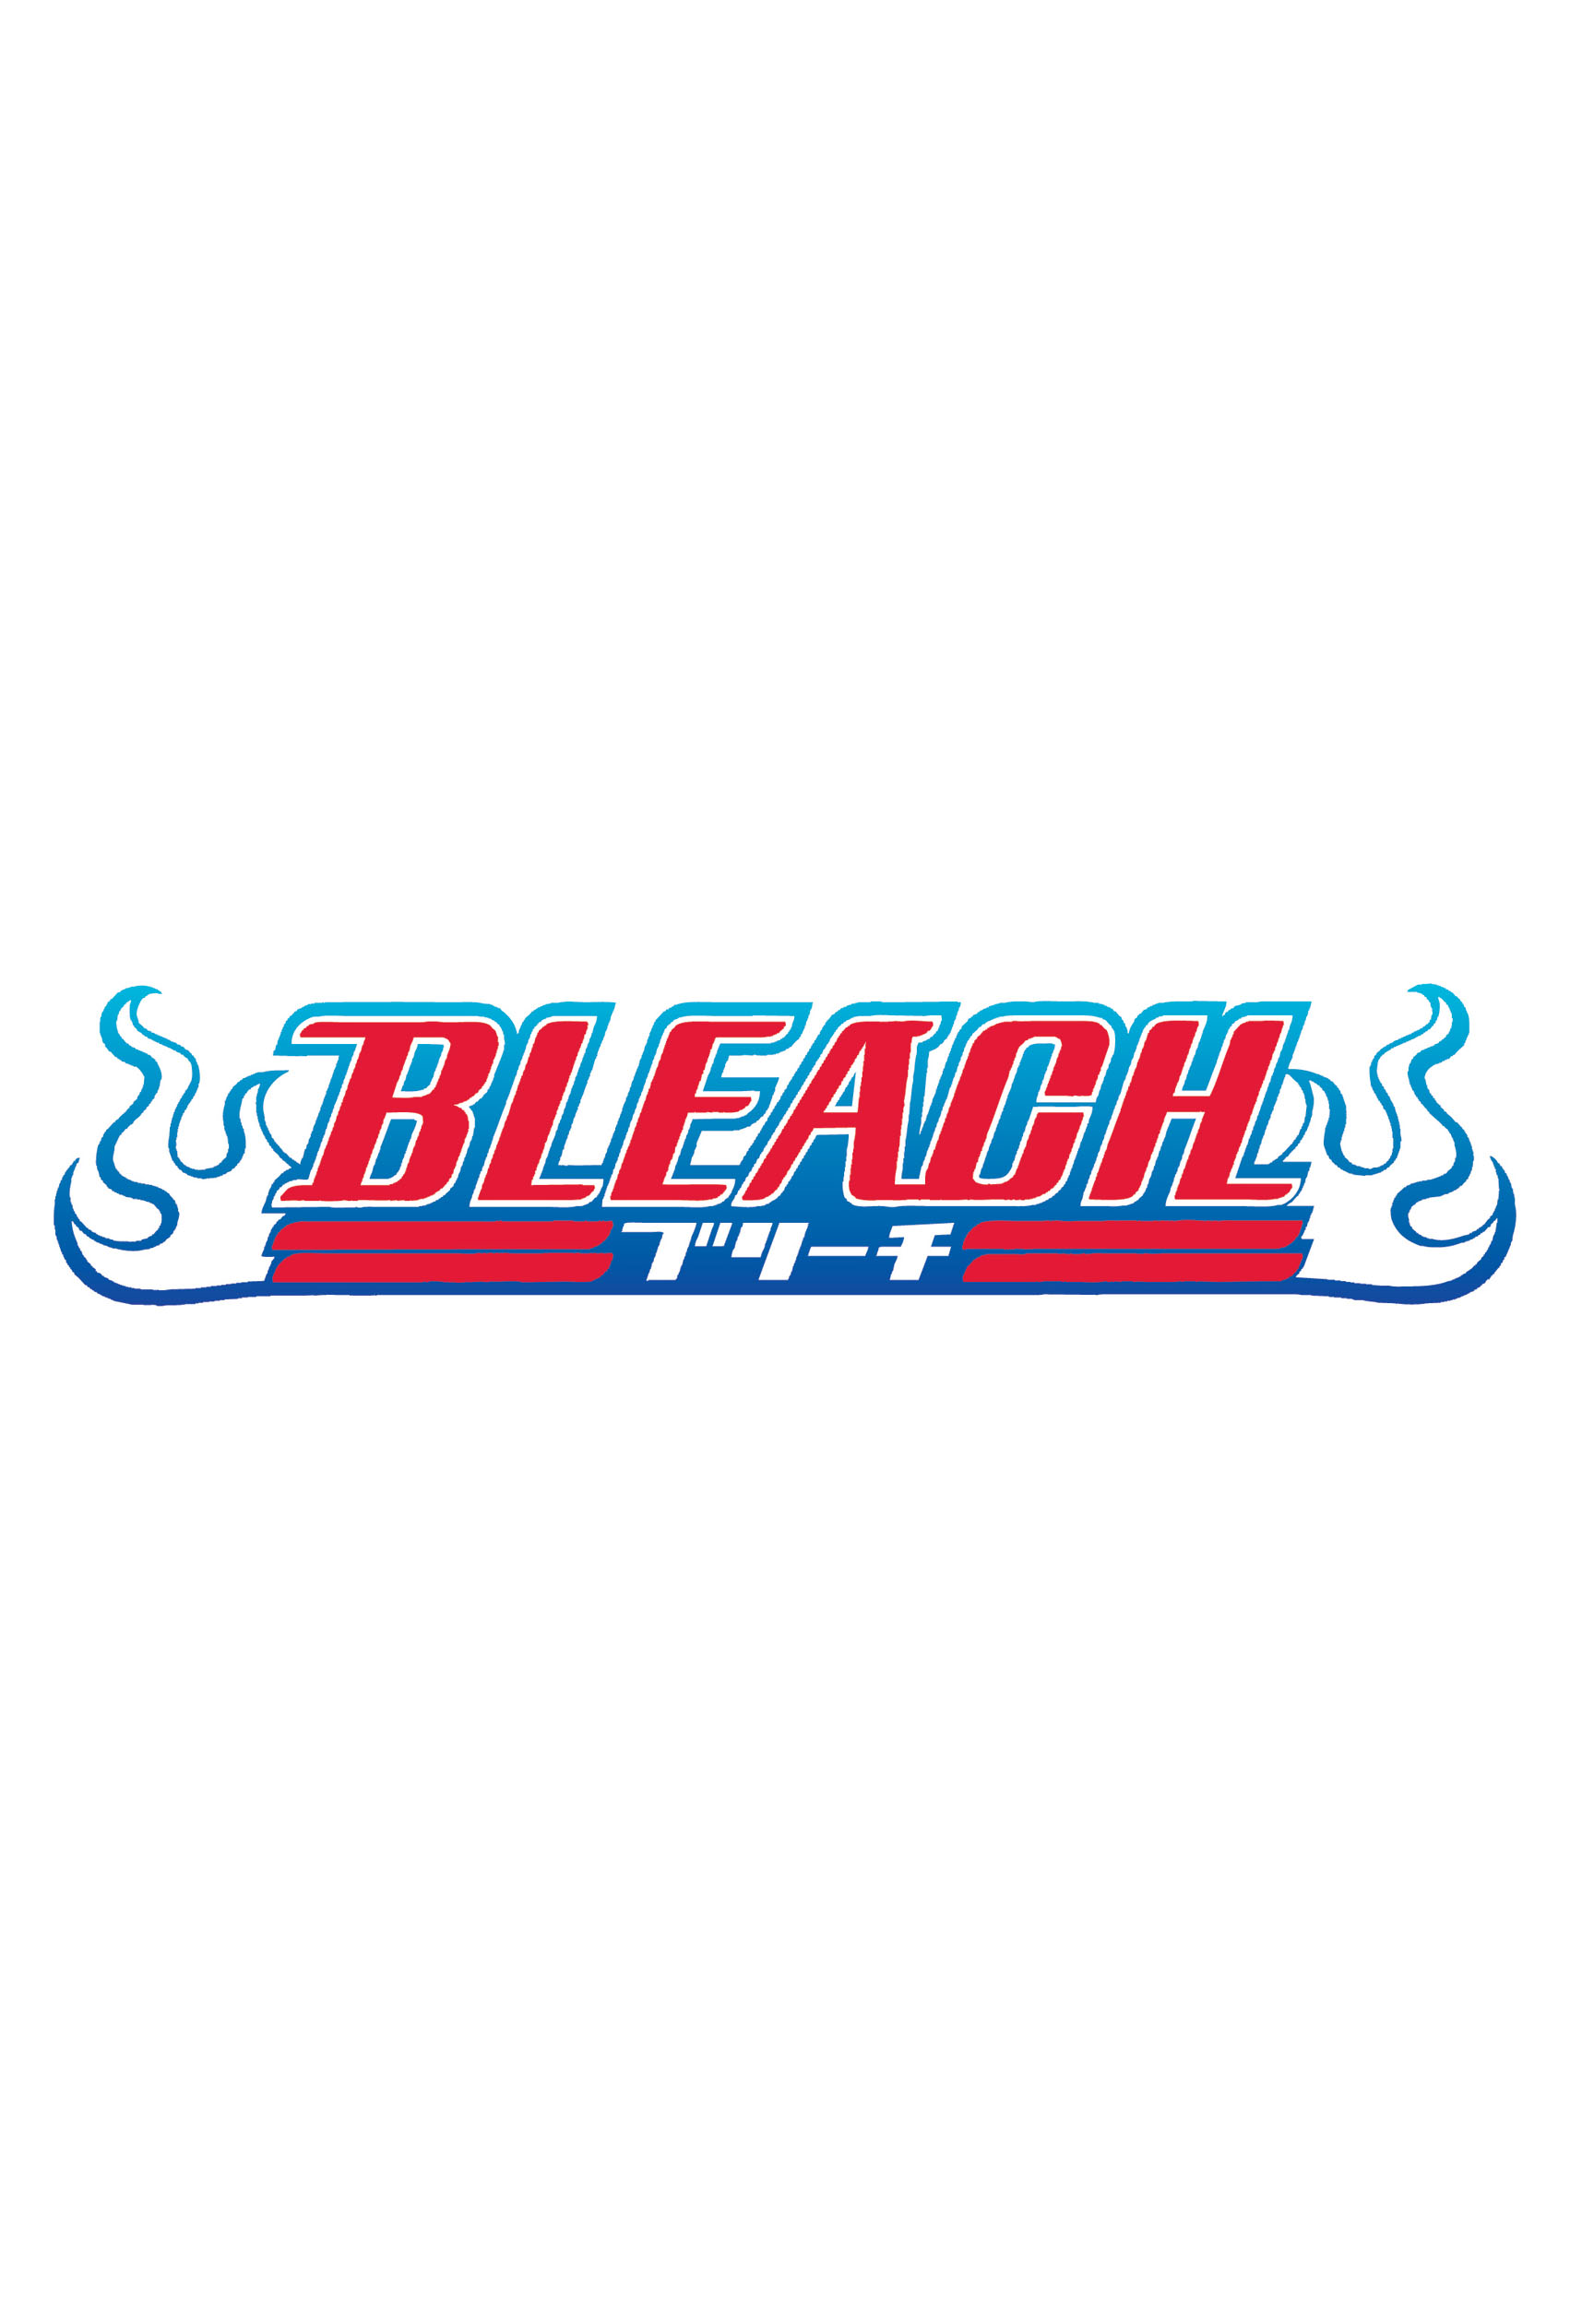 Watch Bleach season 14 episode 21 streaming online